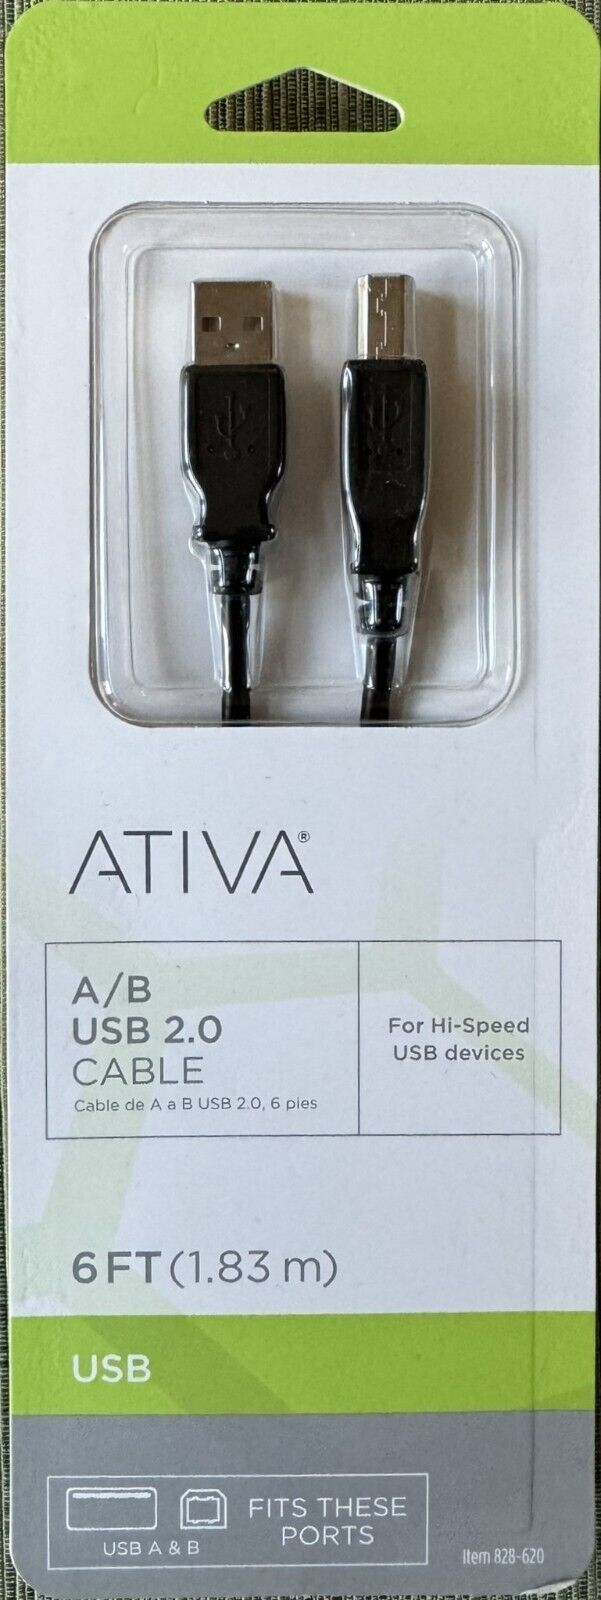 ATIVA USB 2.0 A/B Data Cable 6' Black Hi-Speed USB Devices